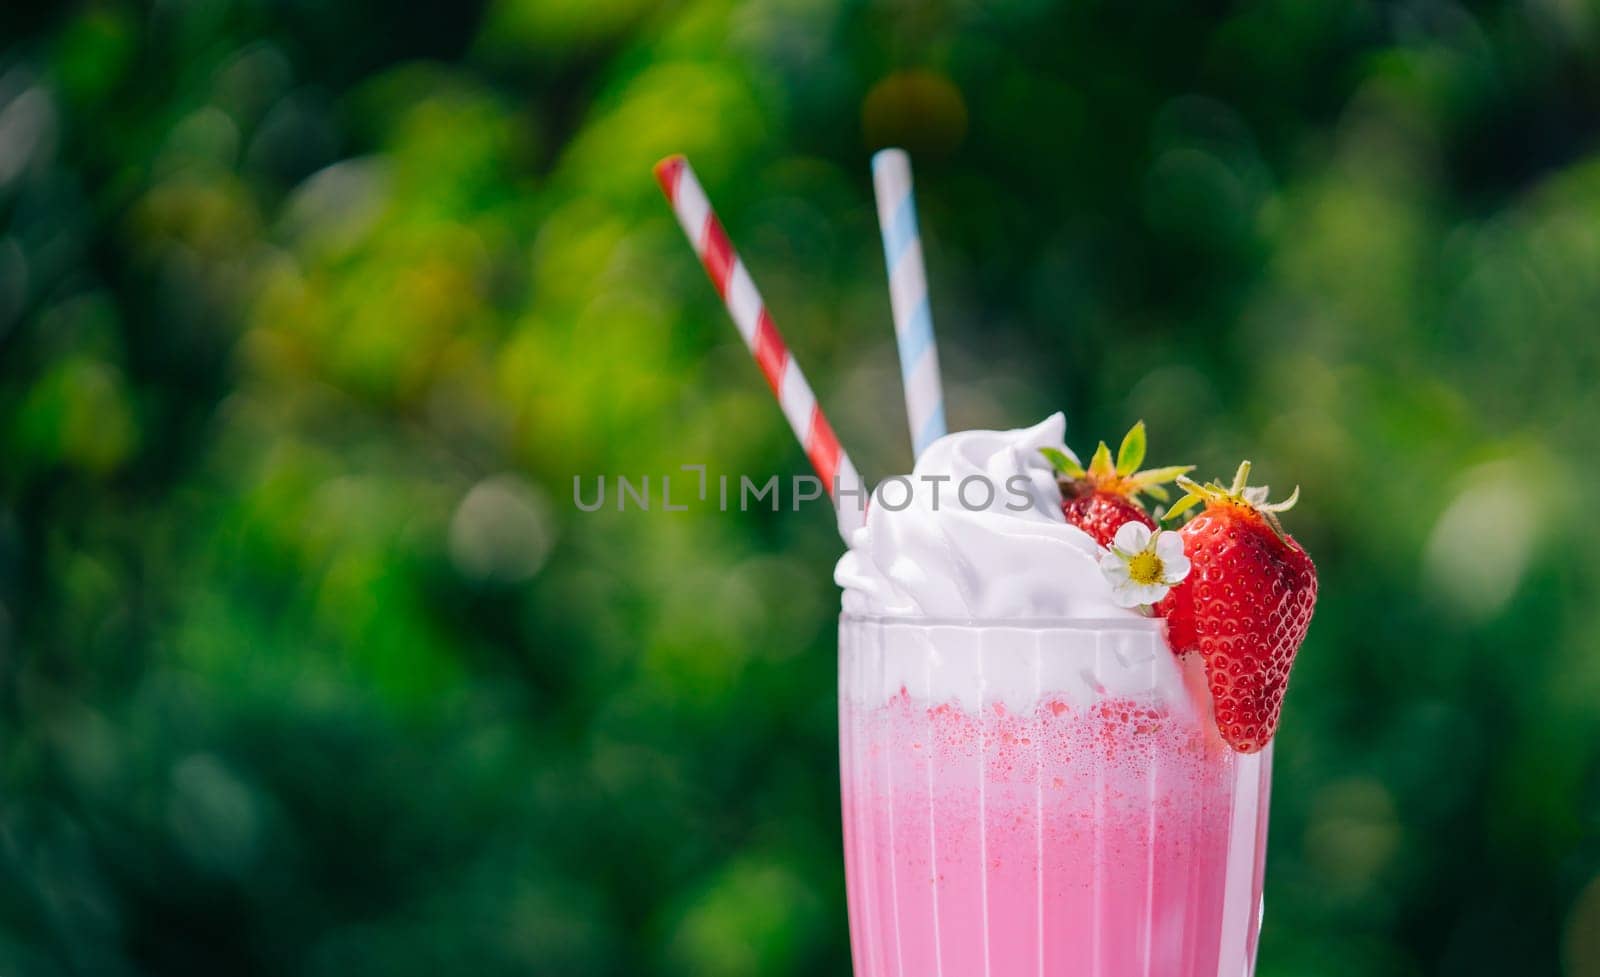 Still life - amazing strawberry milkshake cocktail with straw on nature backdrop by kristina_kokhanova